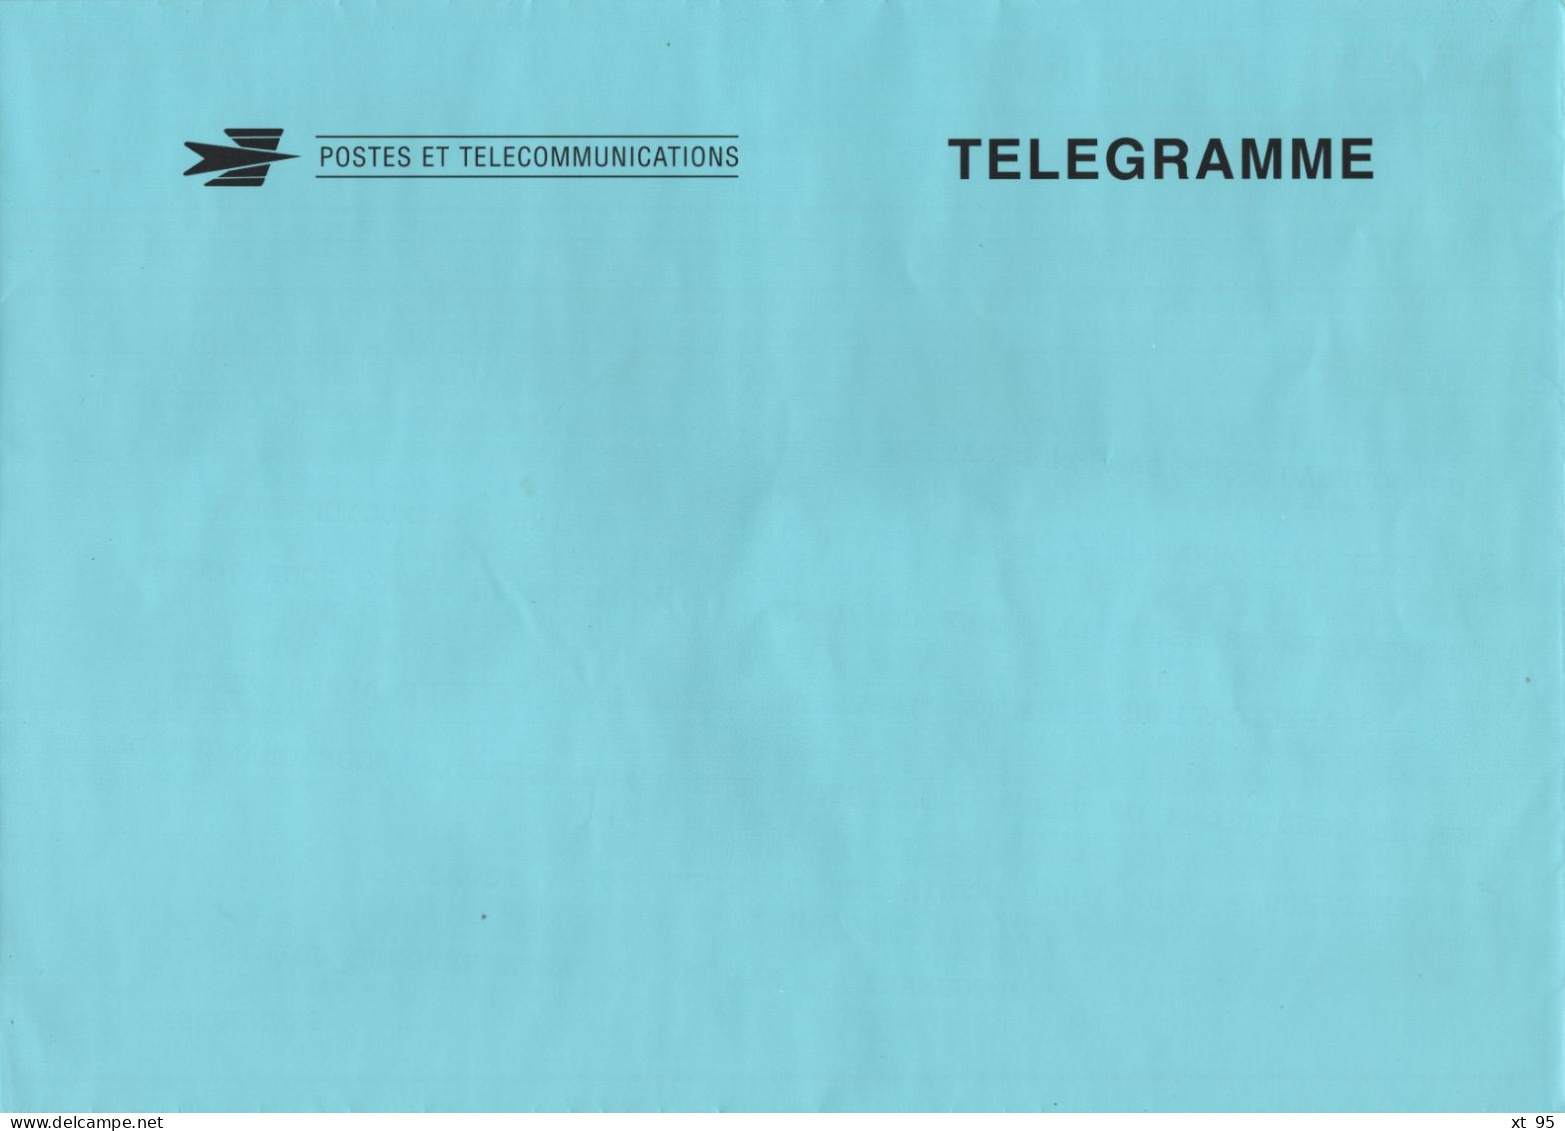 Simili Telegramme (grand Format A4) - Publicite - Sennheiser - Electricite - Telegramas Y Teléfonos